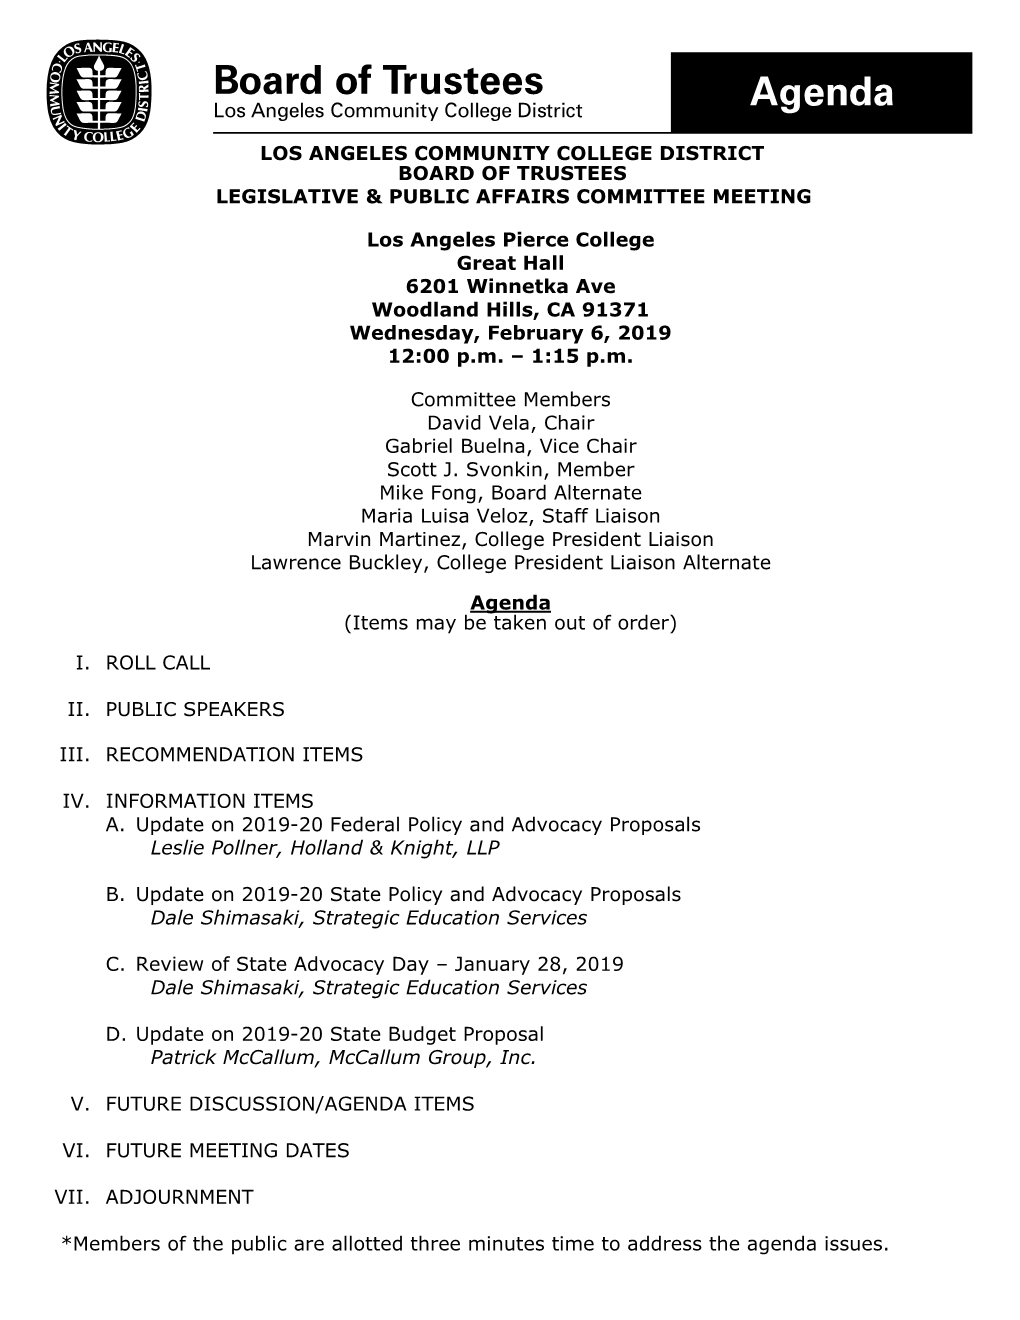 Los Angeles Community College District Board of Trustees Legislative & Public Affairs Committee Meeting